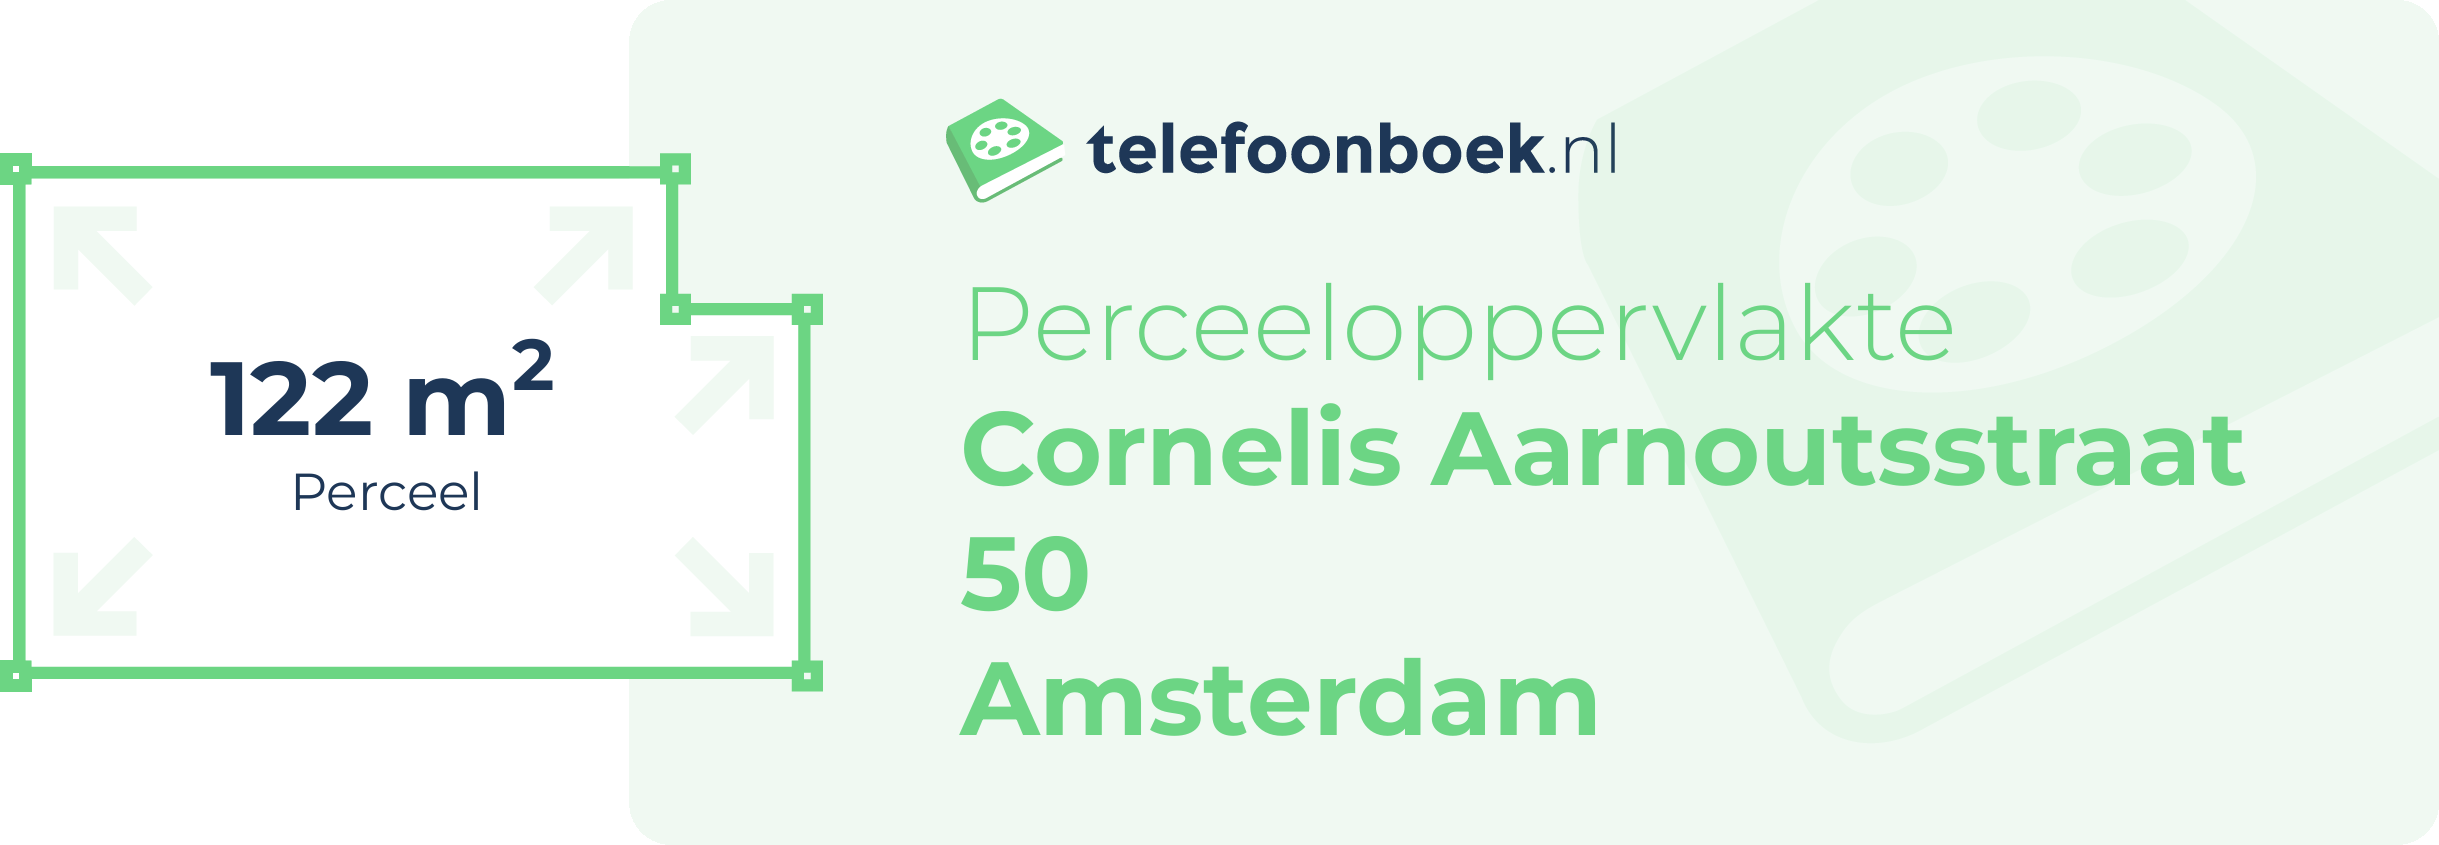 Perceeloppervlakte Cornelis Aarnoutsstraat 50 Amsterdam